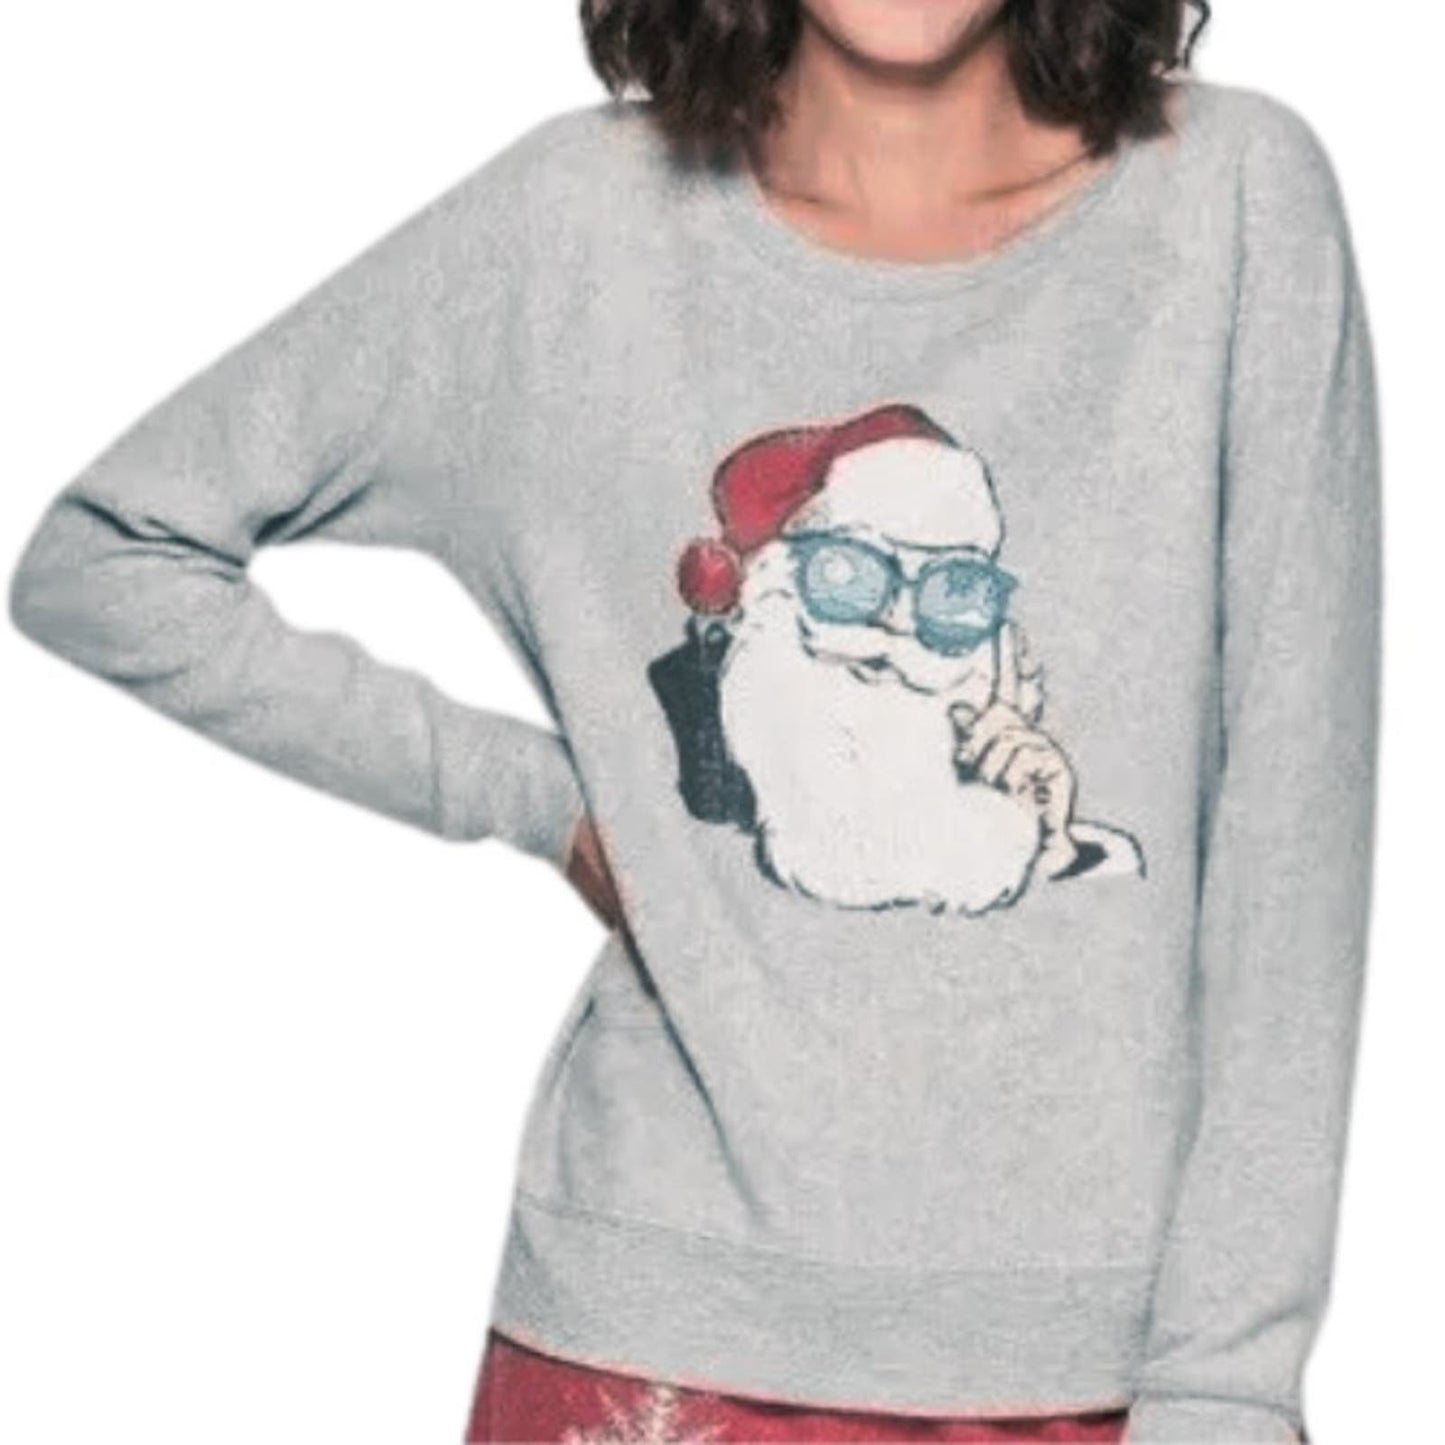 Grayson Threads Cool Santa Loungewear Sweatshirt Unisex Size XS